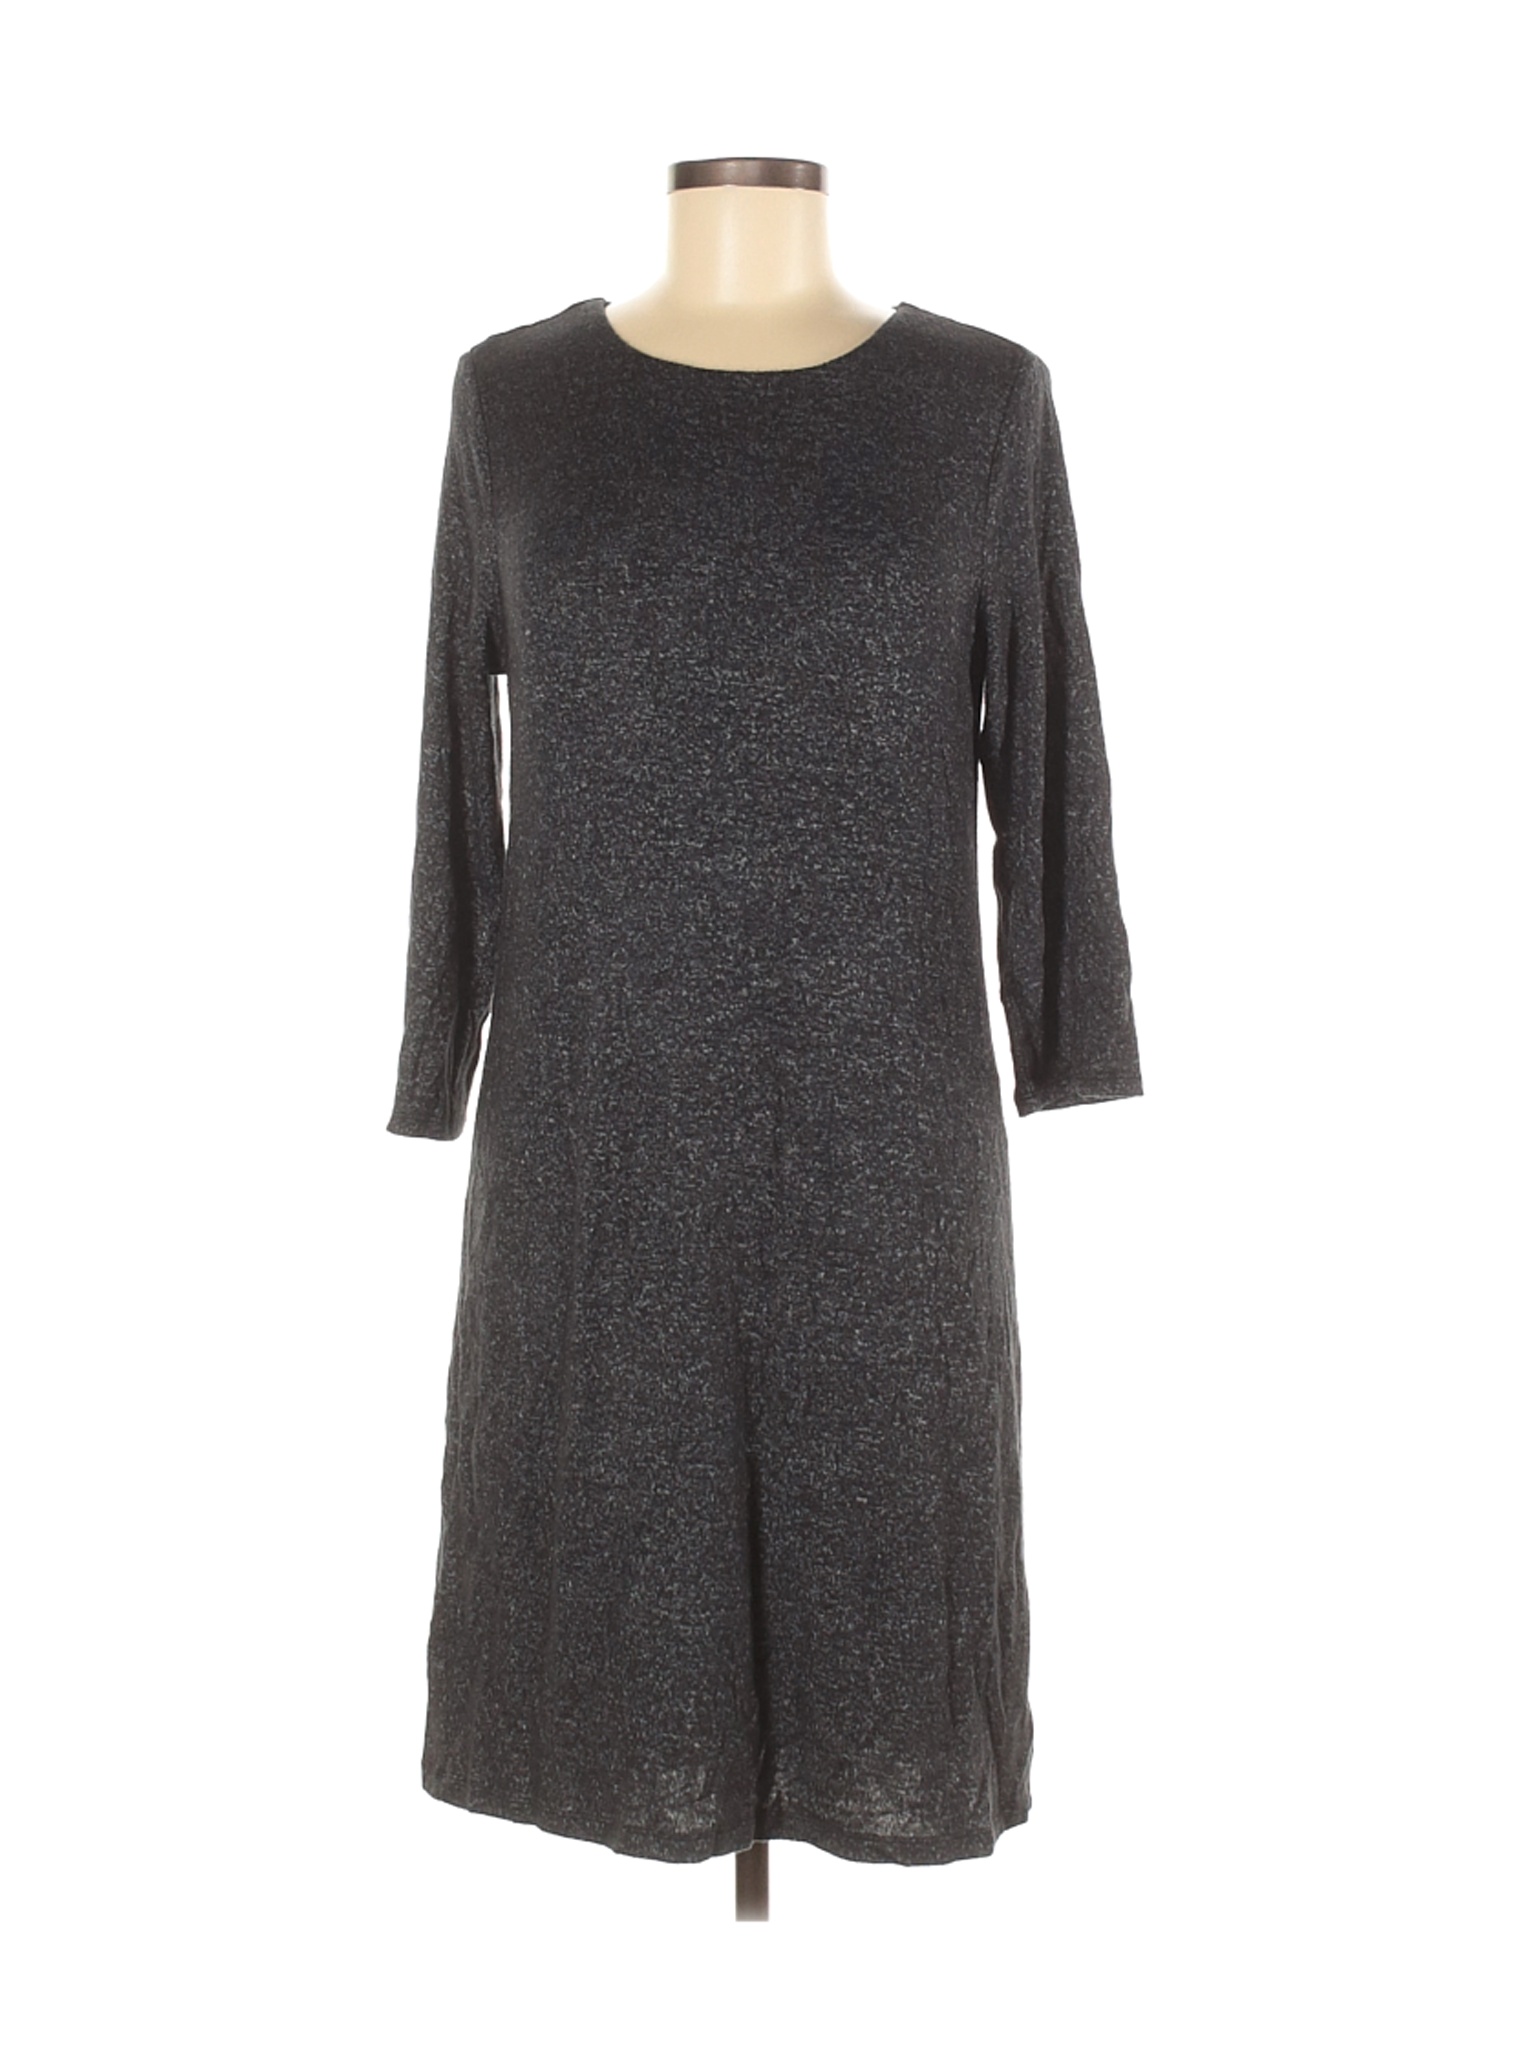 Philosophy Republic Clothing Women Gray Casual Dress M | eBay